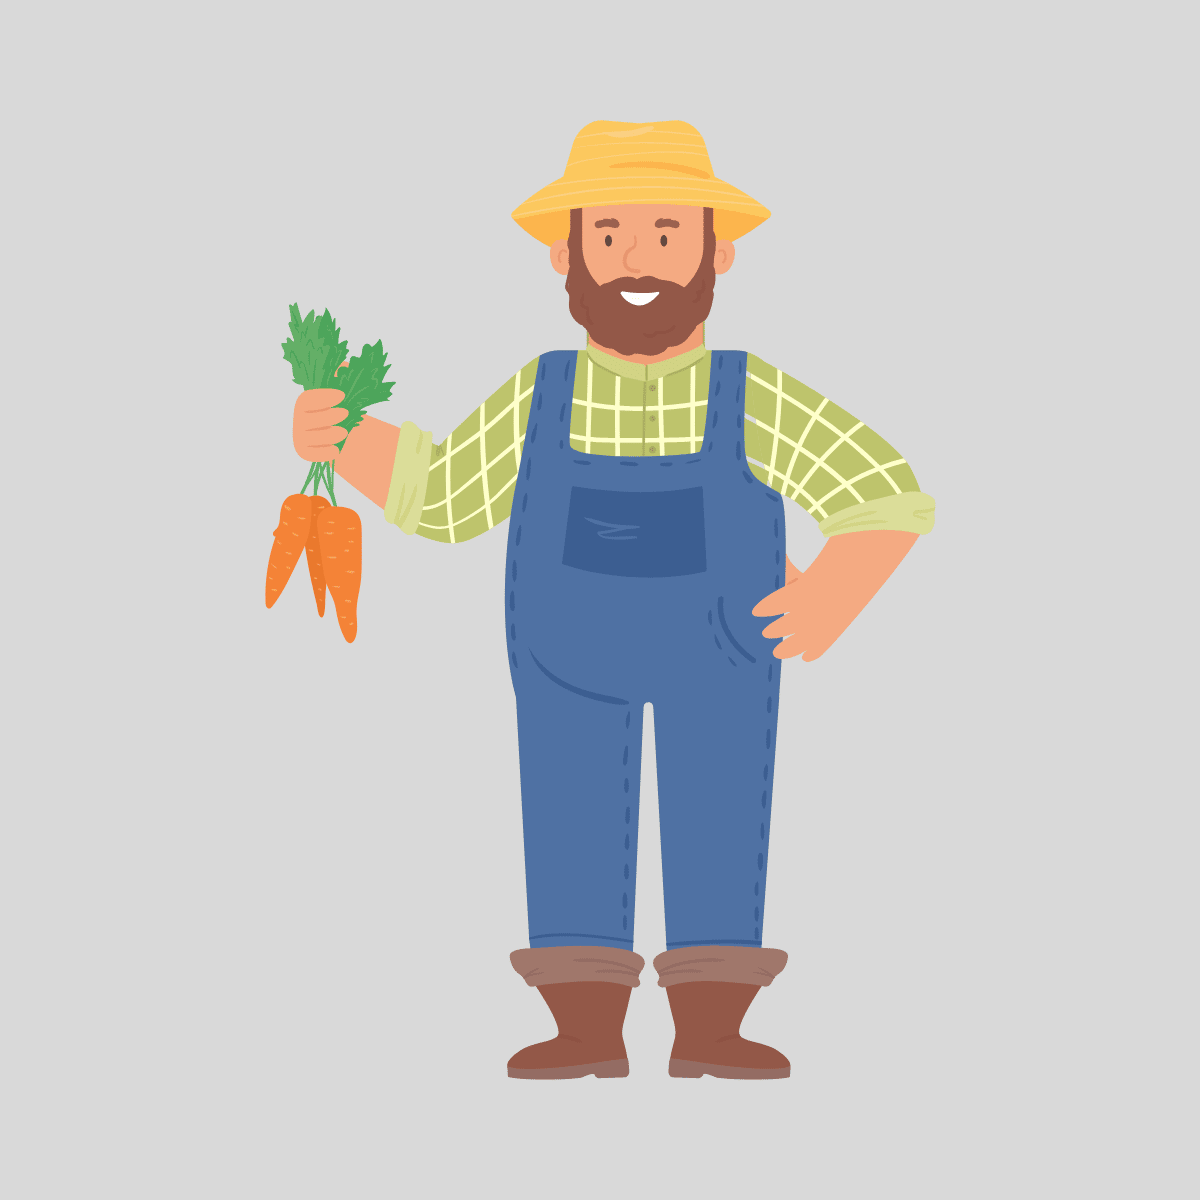 The Farmer in the Dell farmer holding carrots